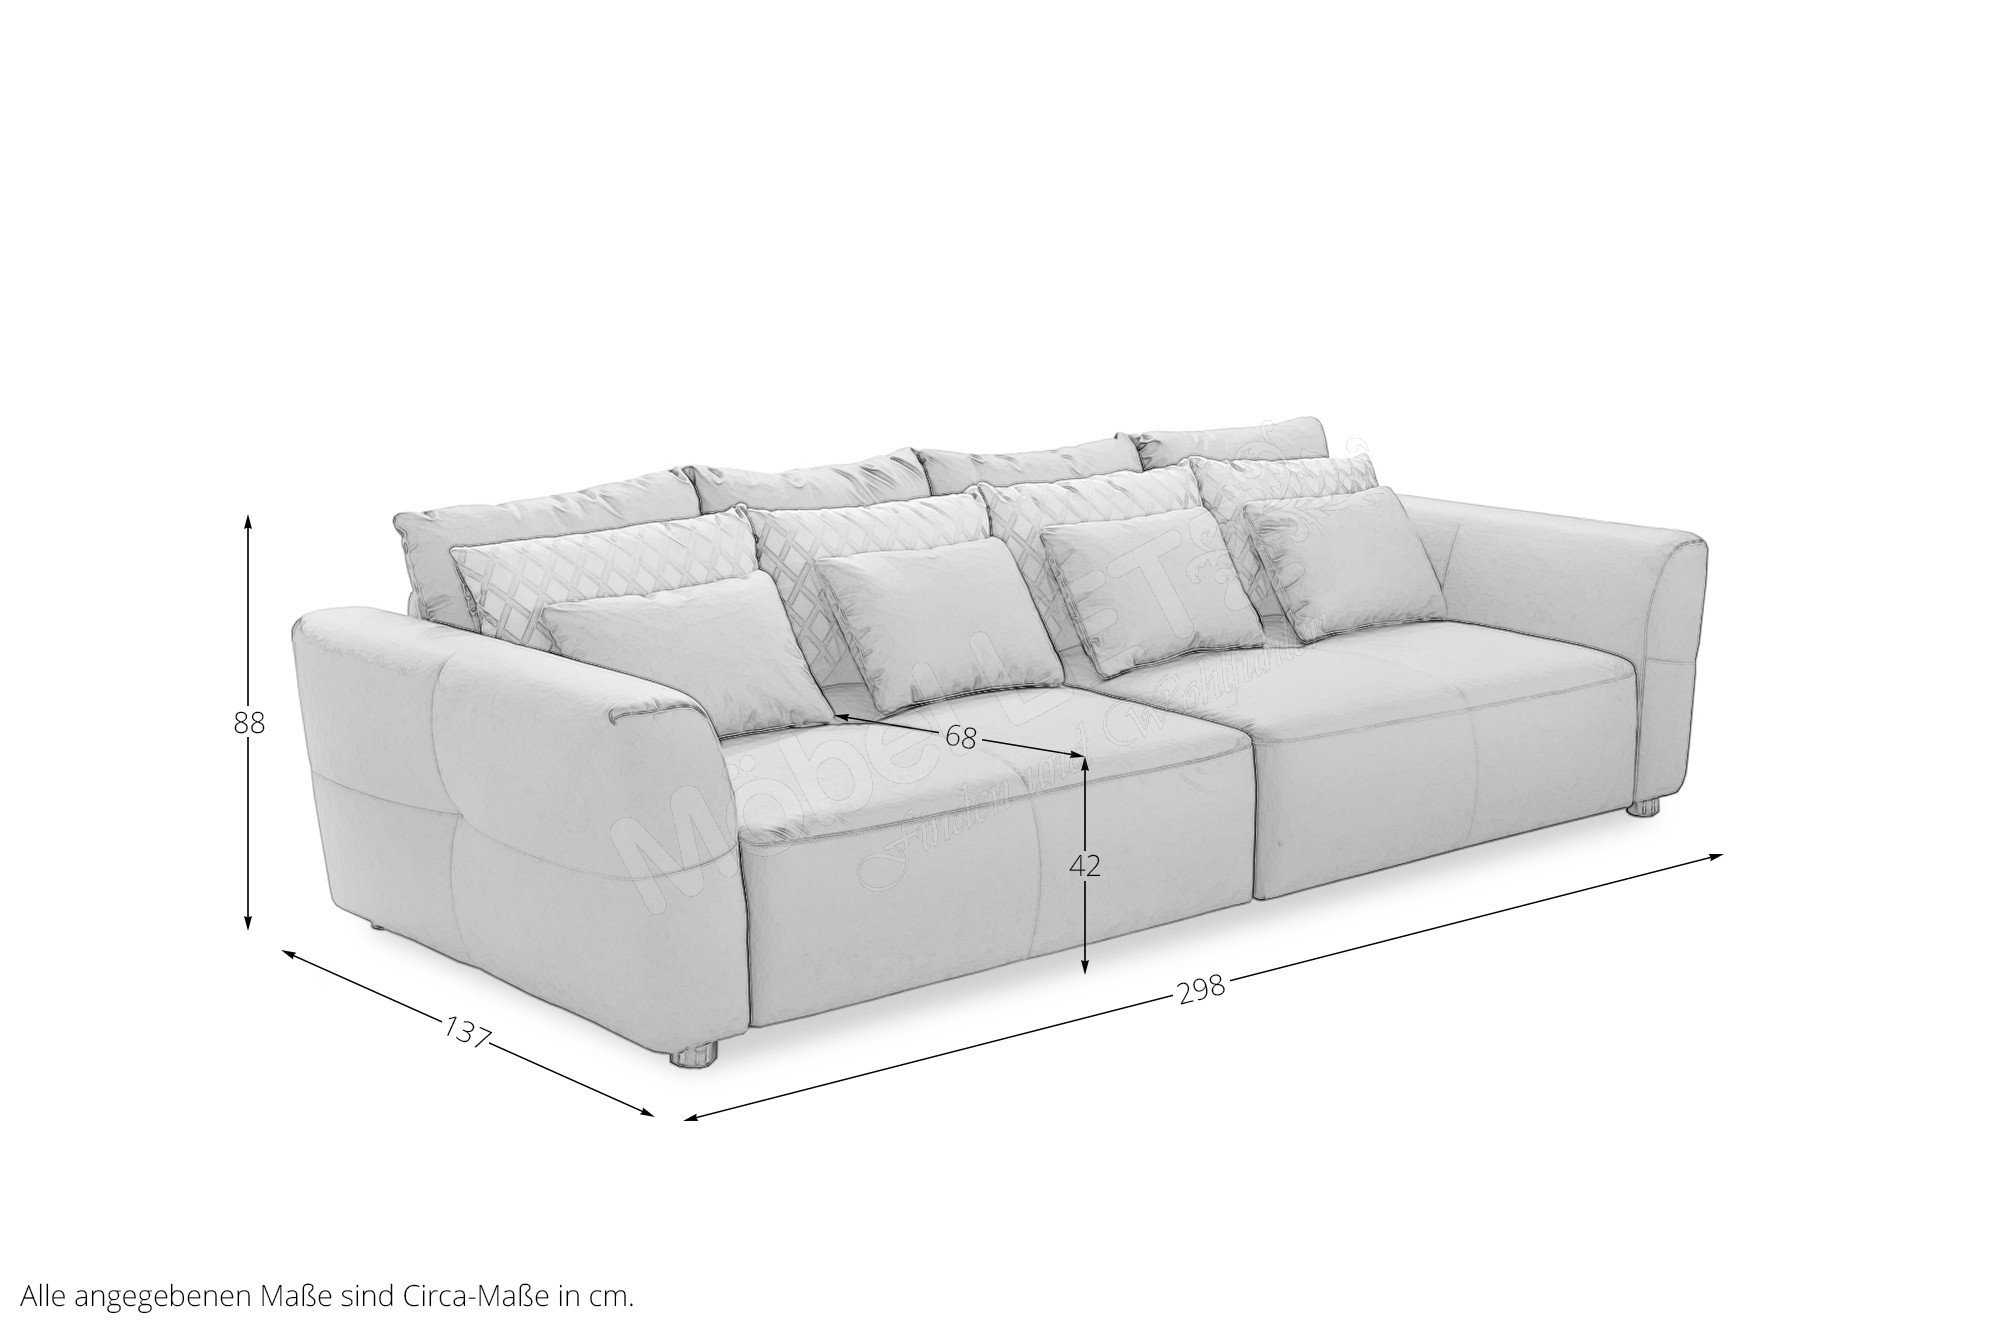 Jockenhöfer Gulliver Big Sofa dunkelblau | Möbel Letz - Ihr Online-Shop